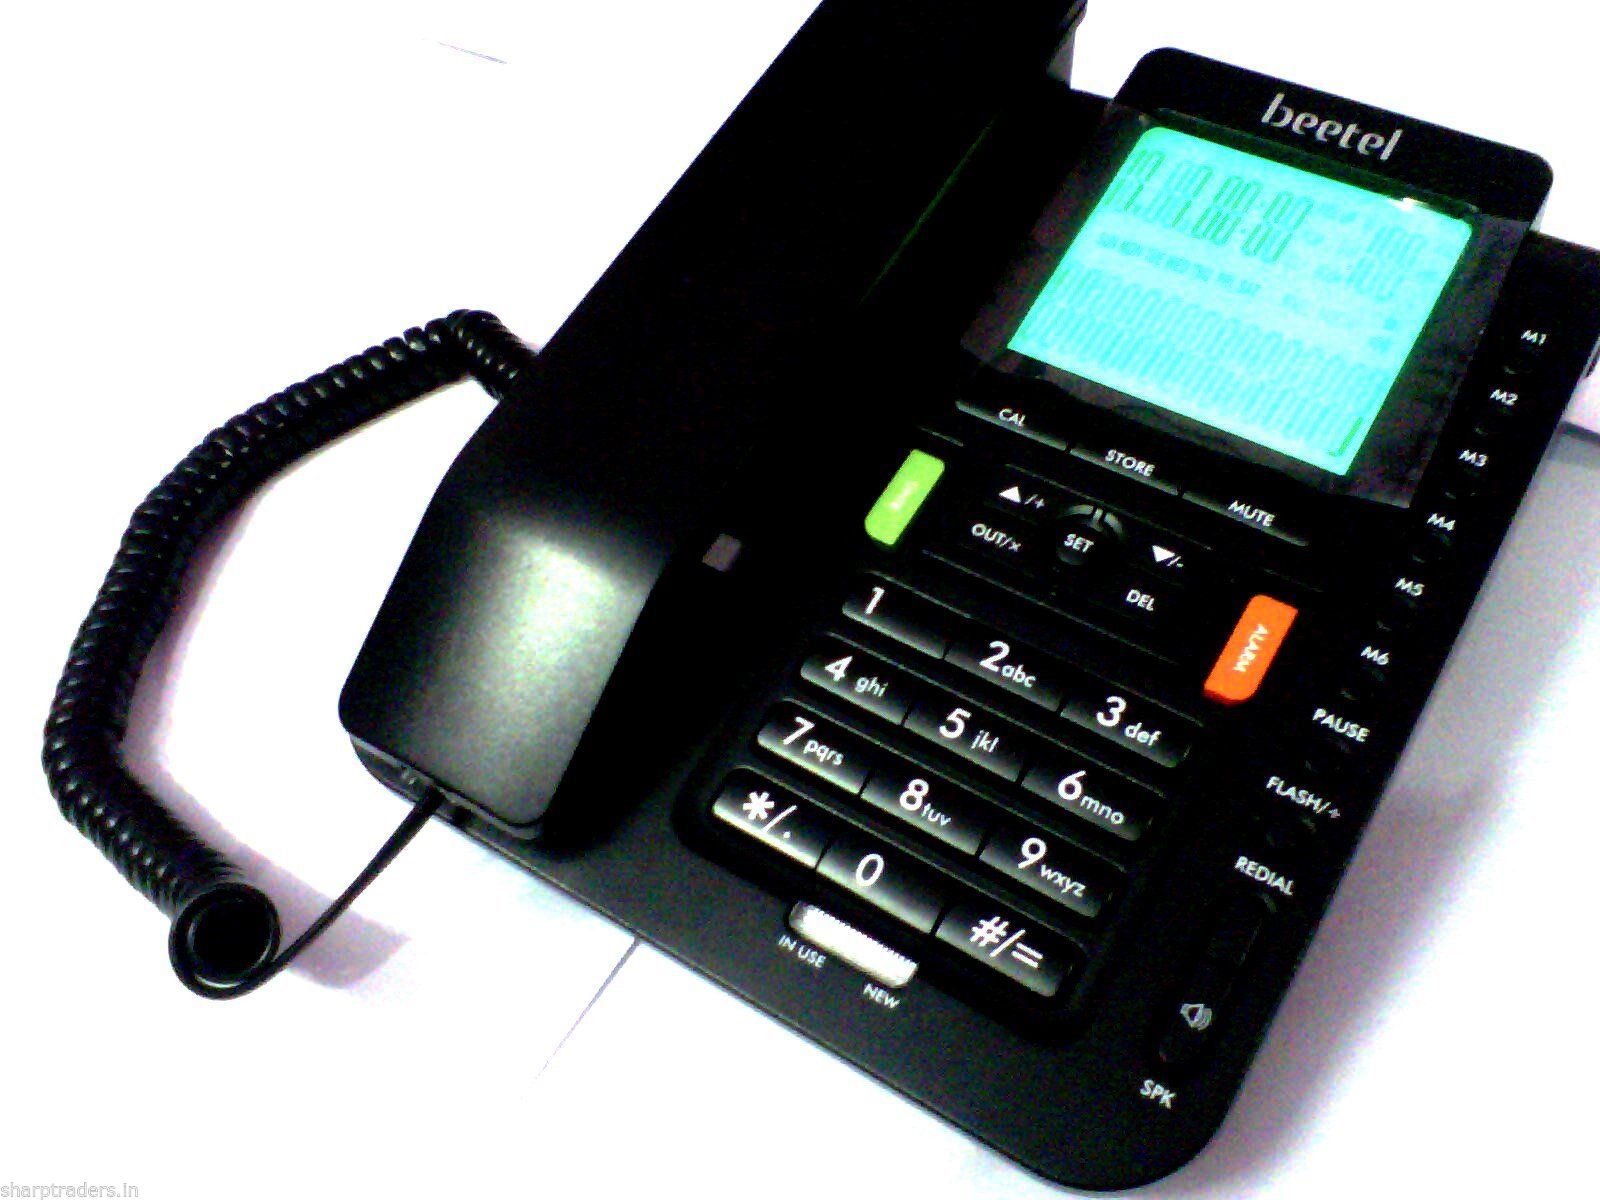 Download Airtel Beetel Landline Phone M71 Manual Software